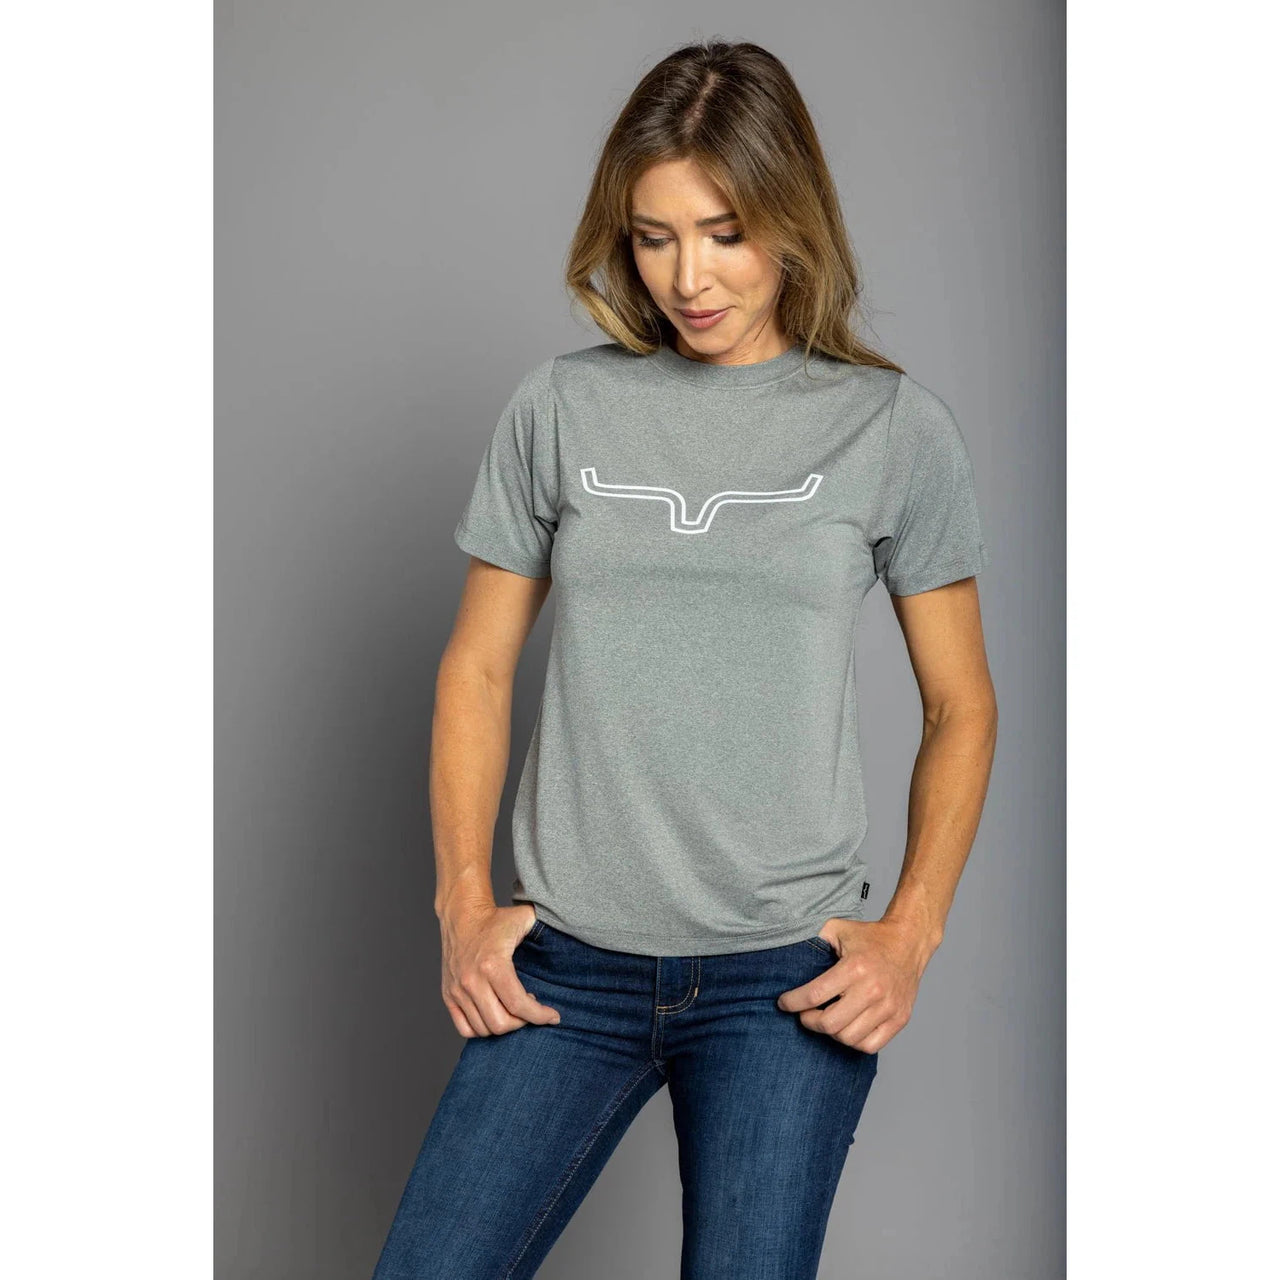 Kimes Women's Phase 2 Tech T-Shirt - Grey Heather